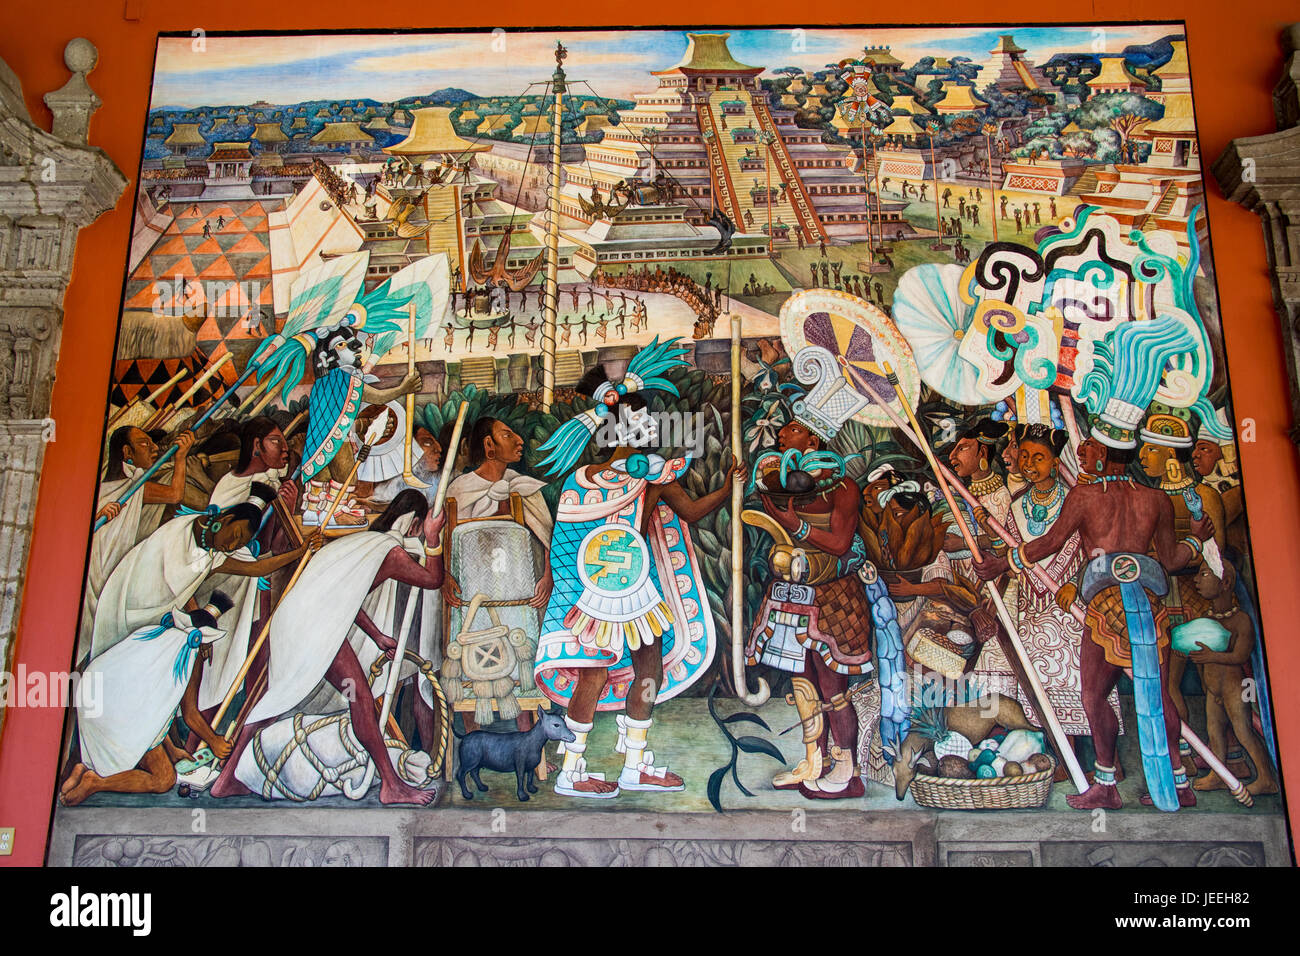 Aztec history murals by Diego Rivera in the National Palace, Palacio Nacional, Mexico City, Mexico Stock Photo